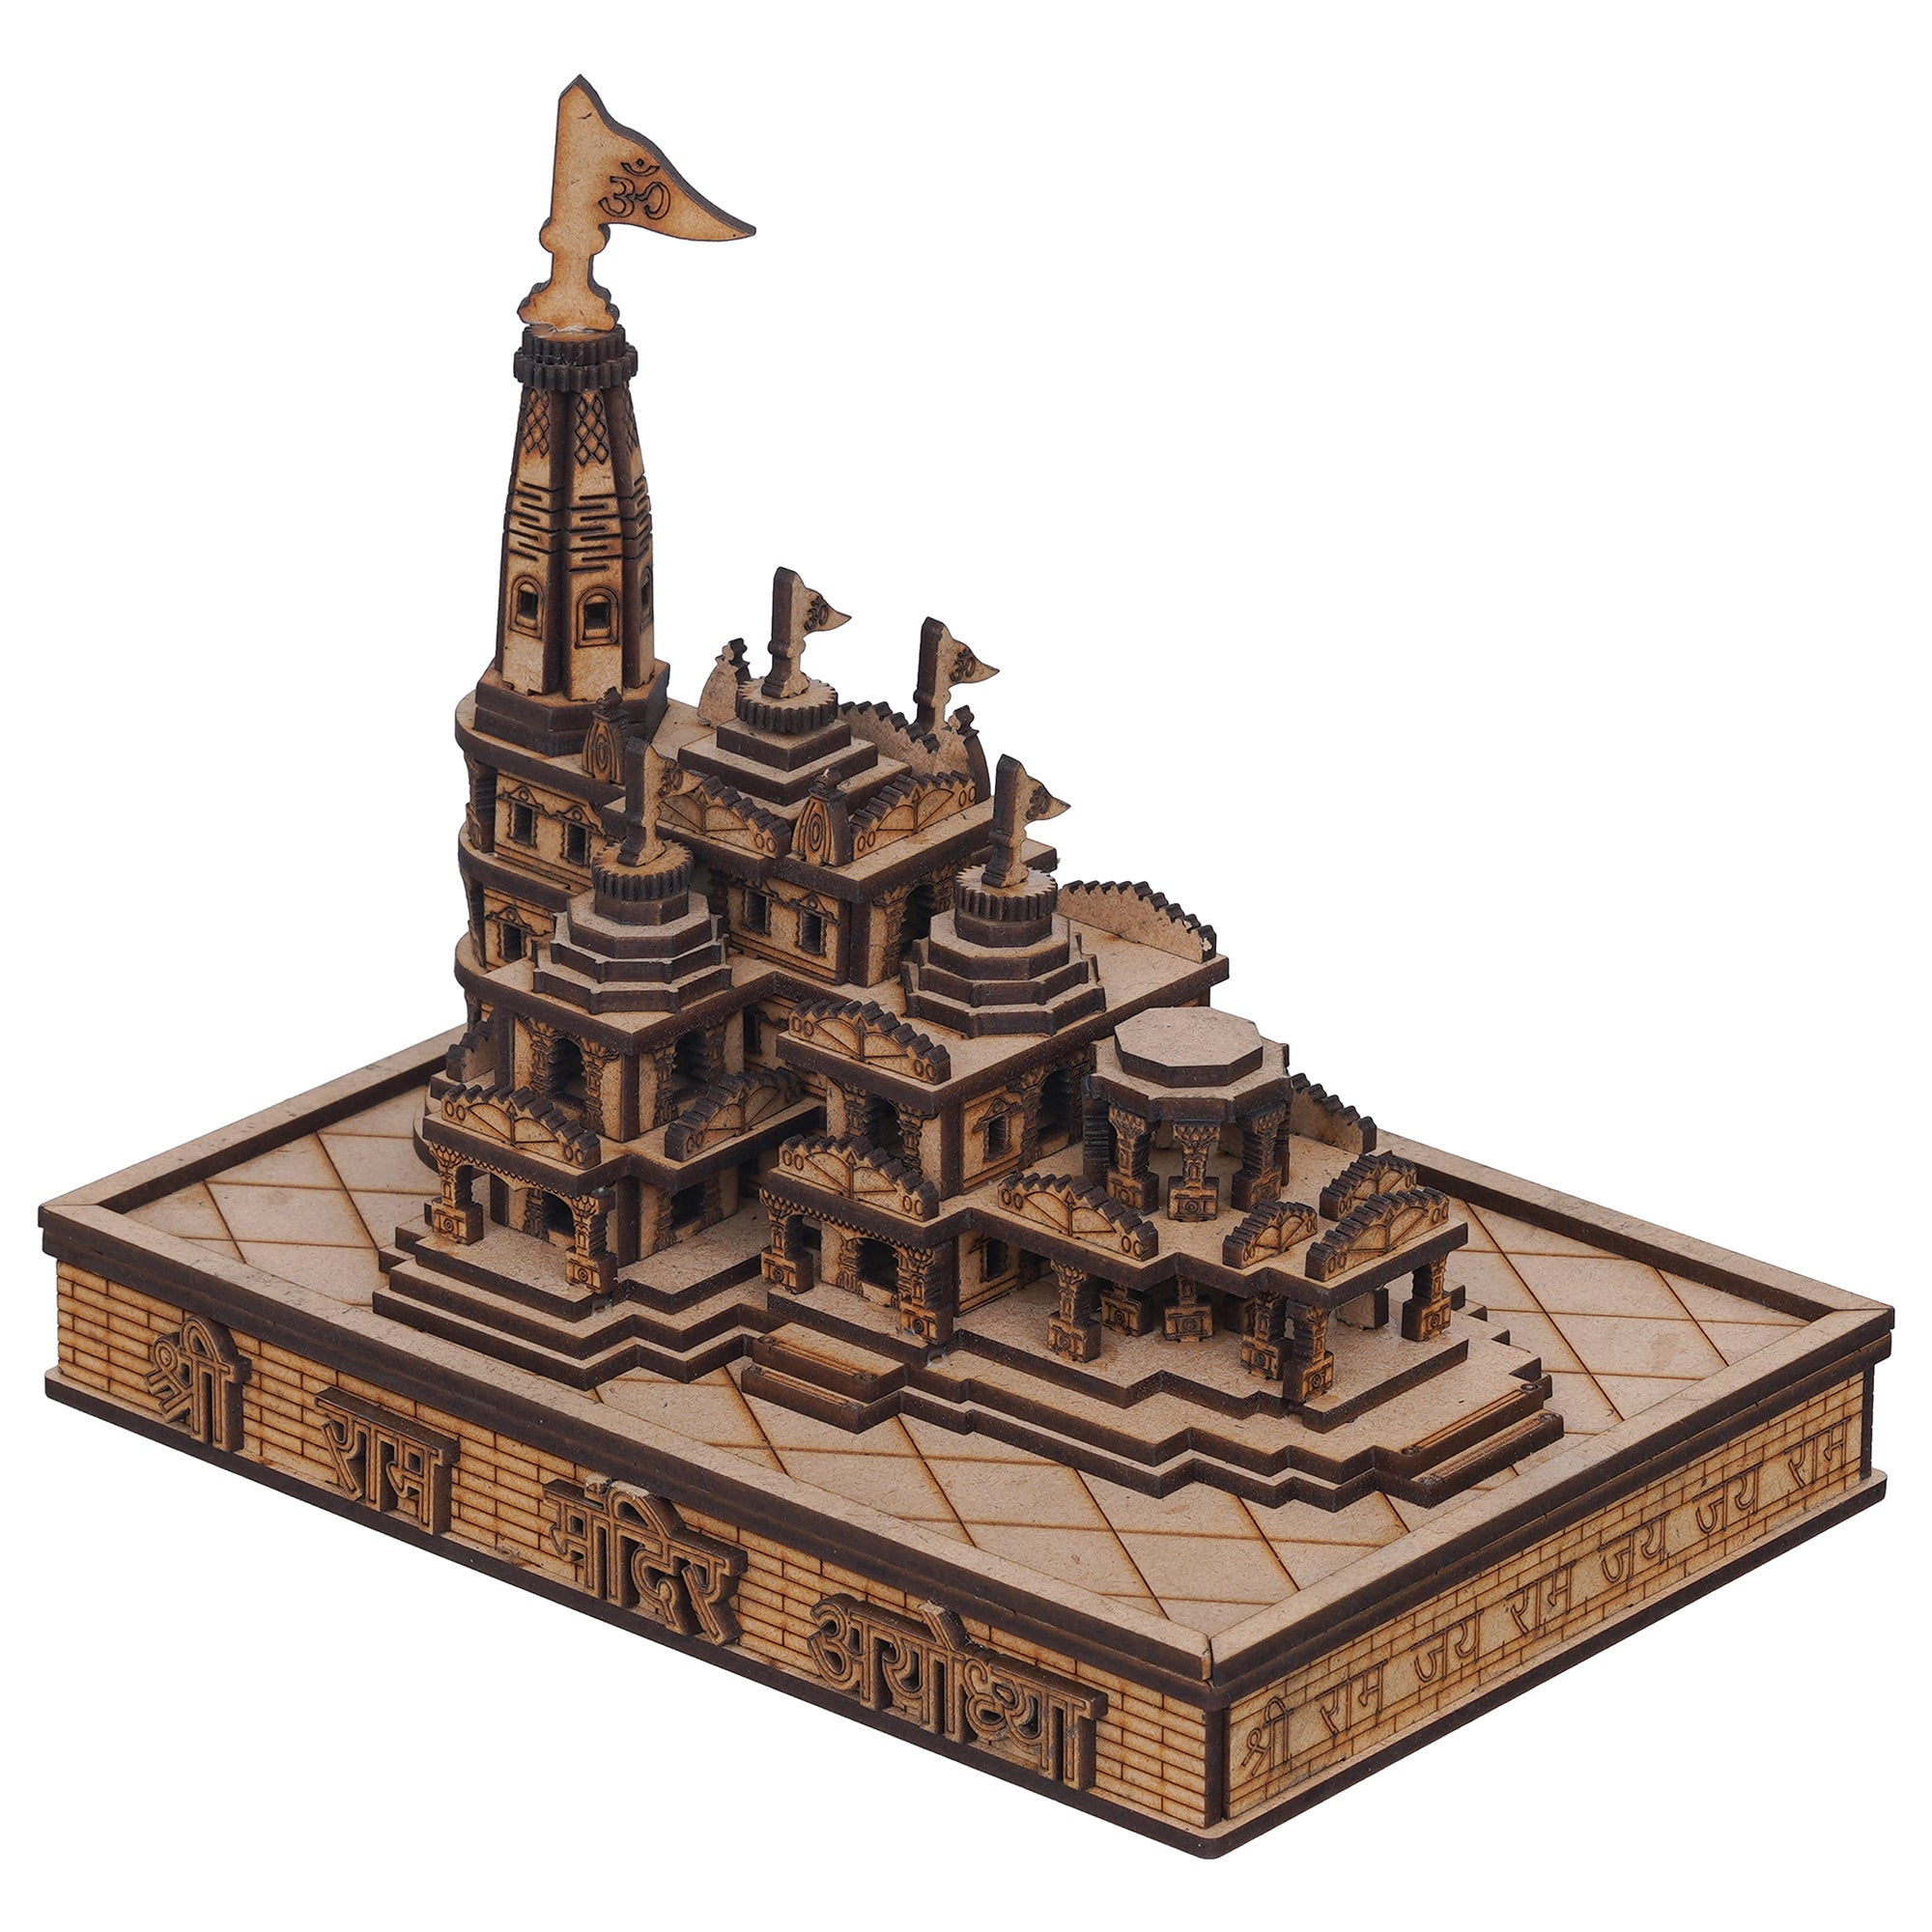 eCraftIndia Shri Ram Mandir Ayodhya Model - Wooden MDF Craftsmanship Authentic Designer Temple - Ideal for Home Temple, Decor, and Spiritual Gifting (Beige, Brown) 2